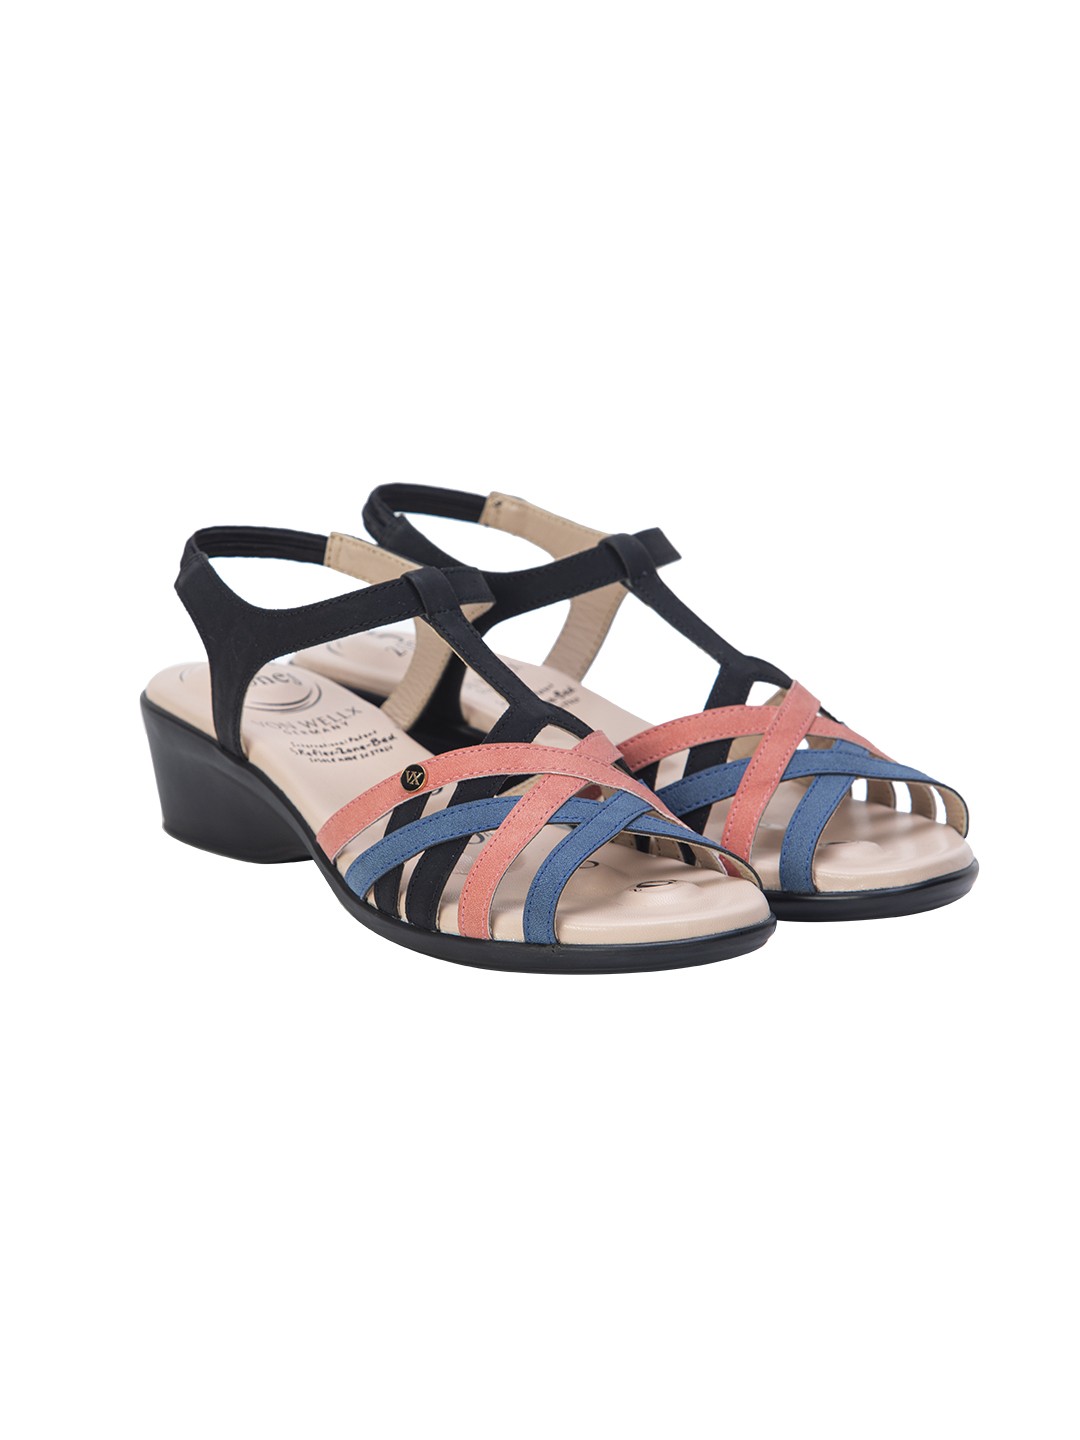 Buy Von Wellx Chloe Comfort Black Sandal Online in Nashik